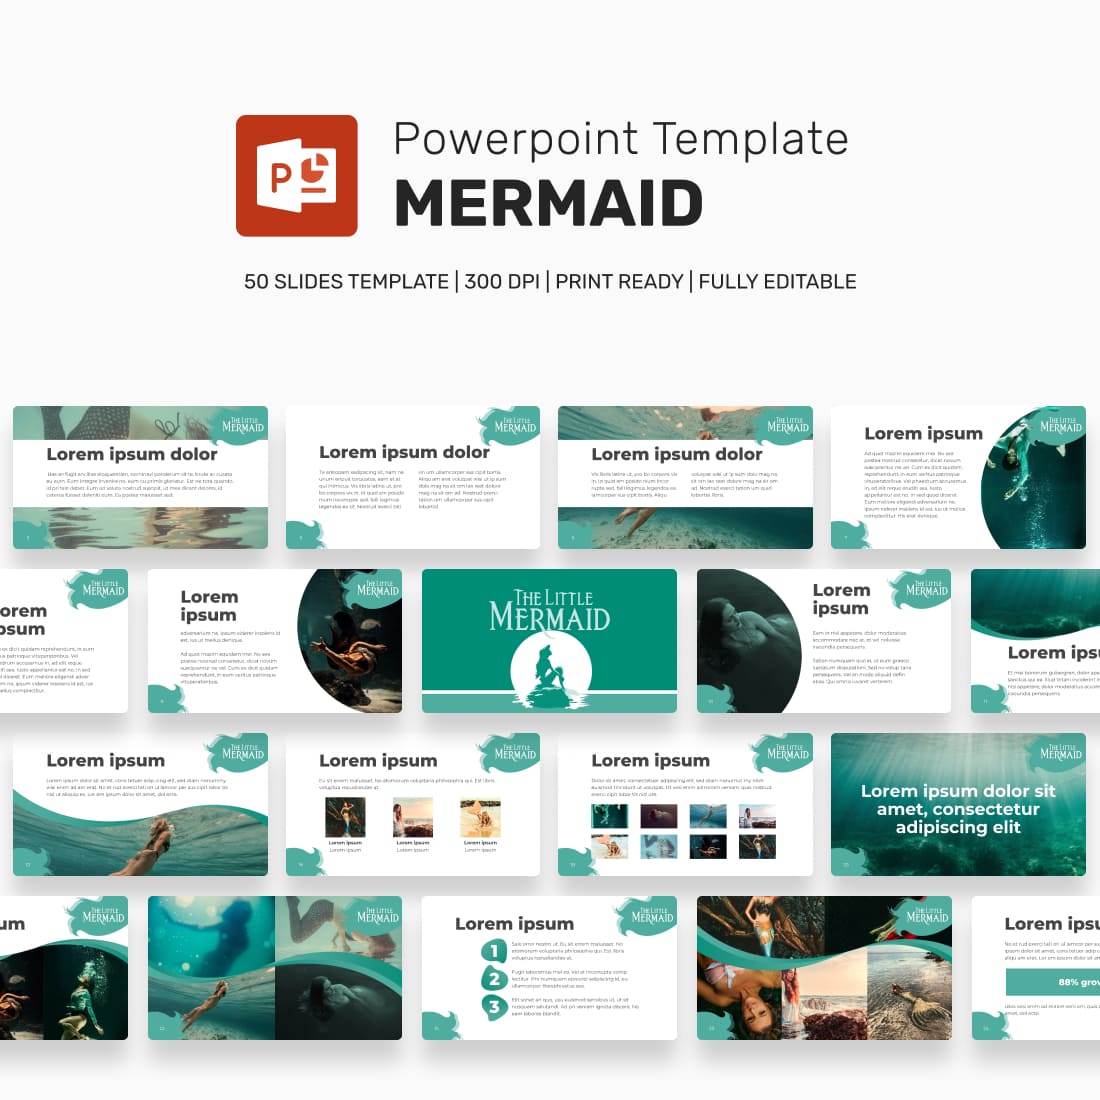 Mermaid Disney PowerPoint template main cover.